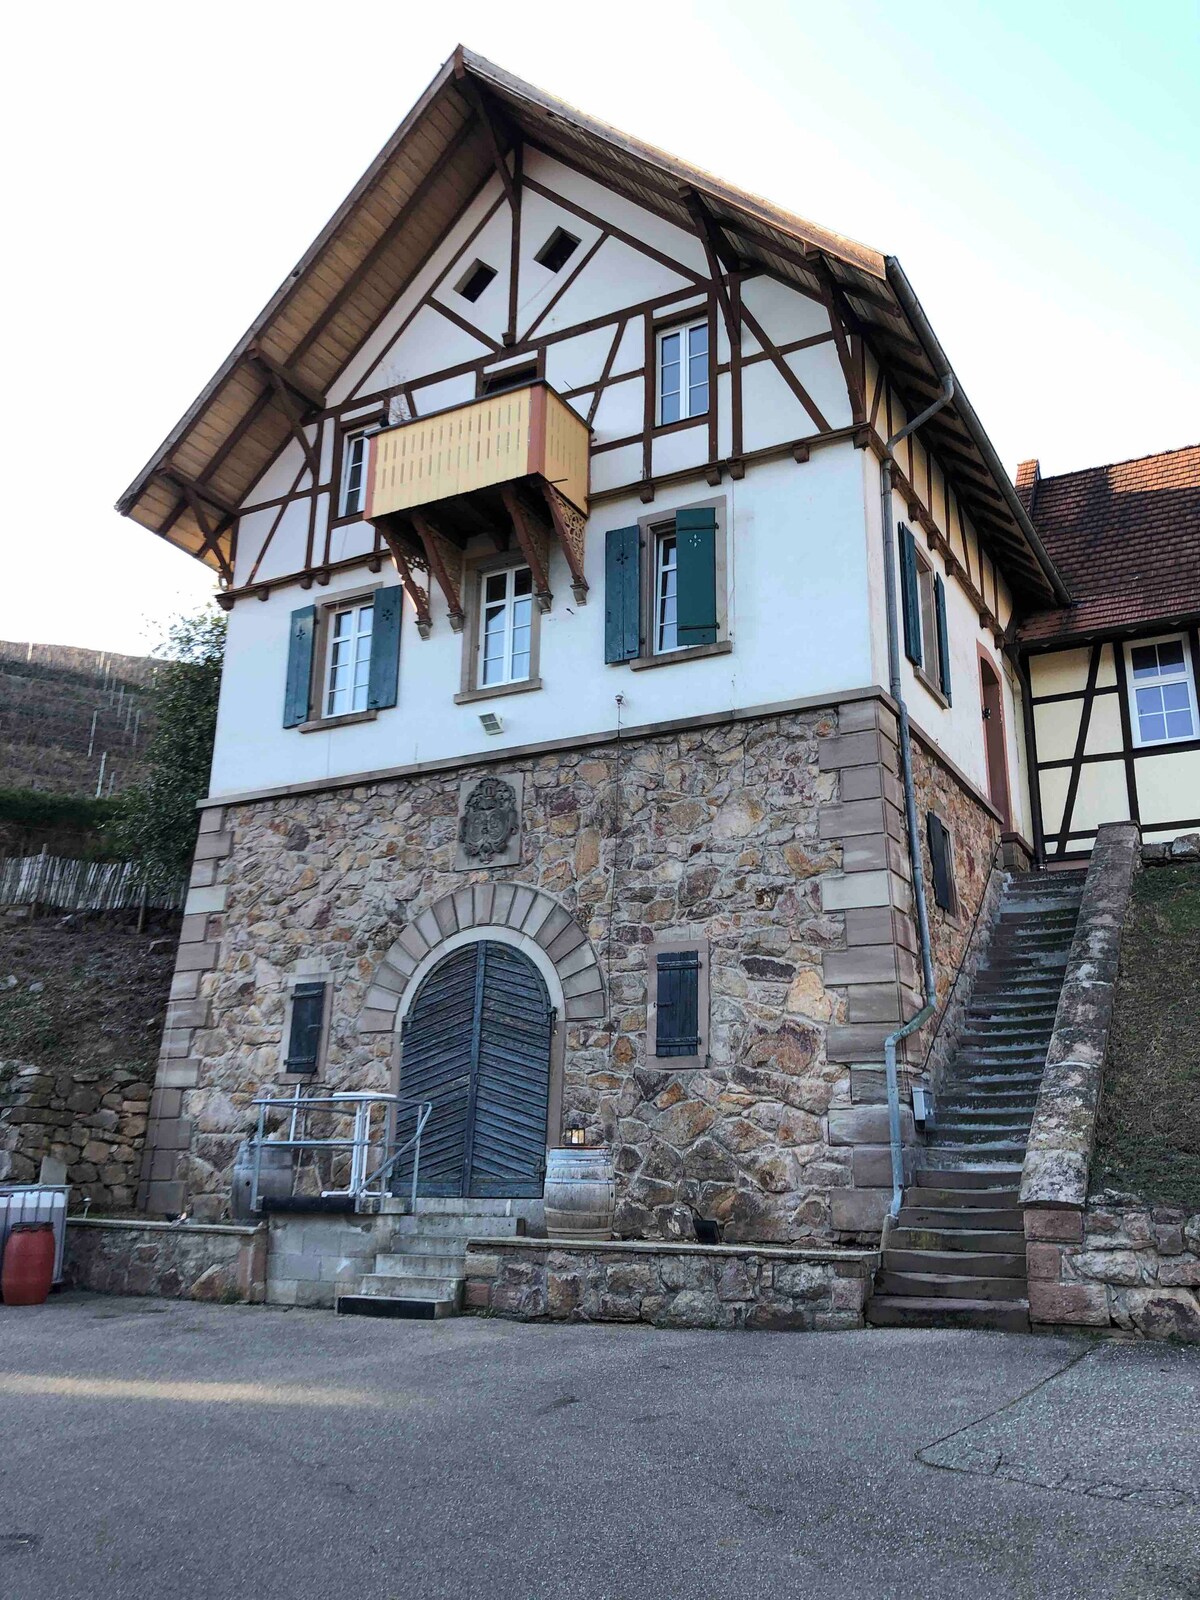 Wein Lodge Durbach - Group House